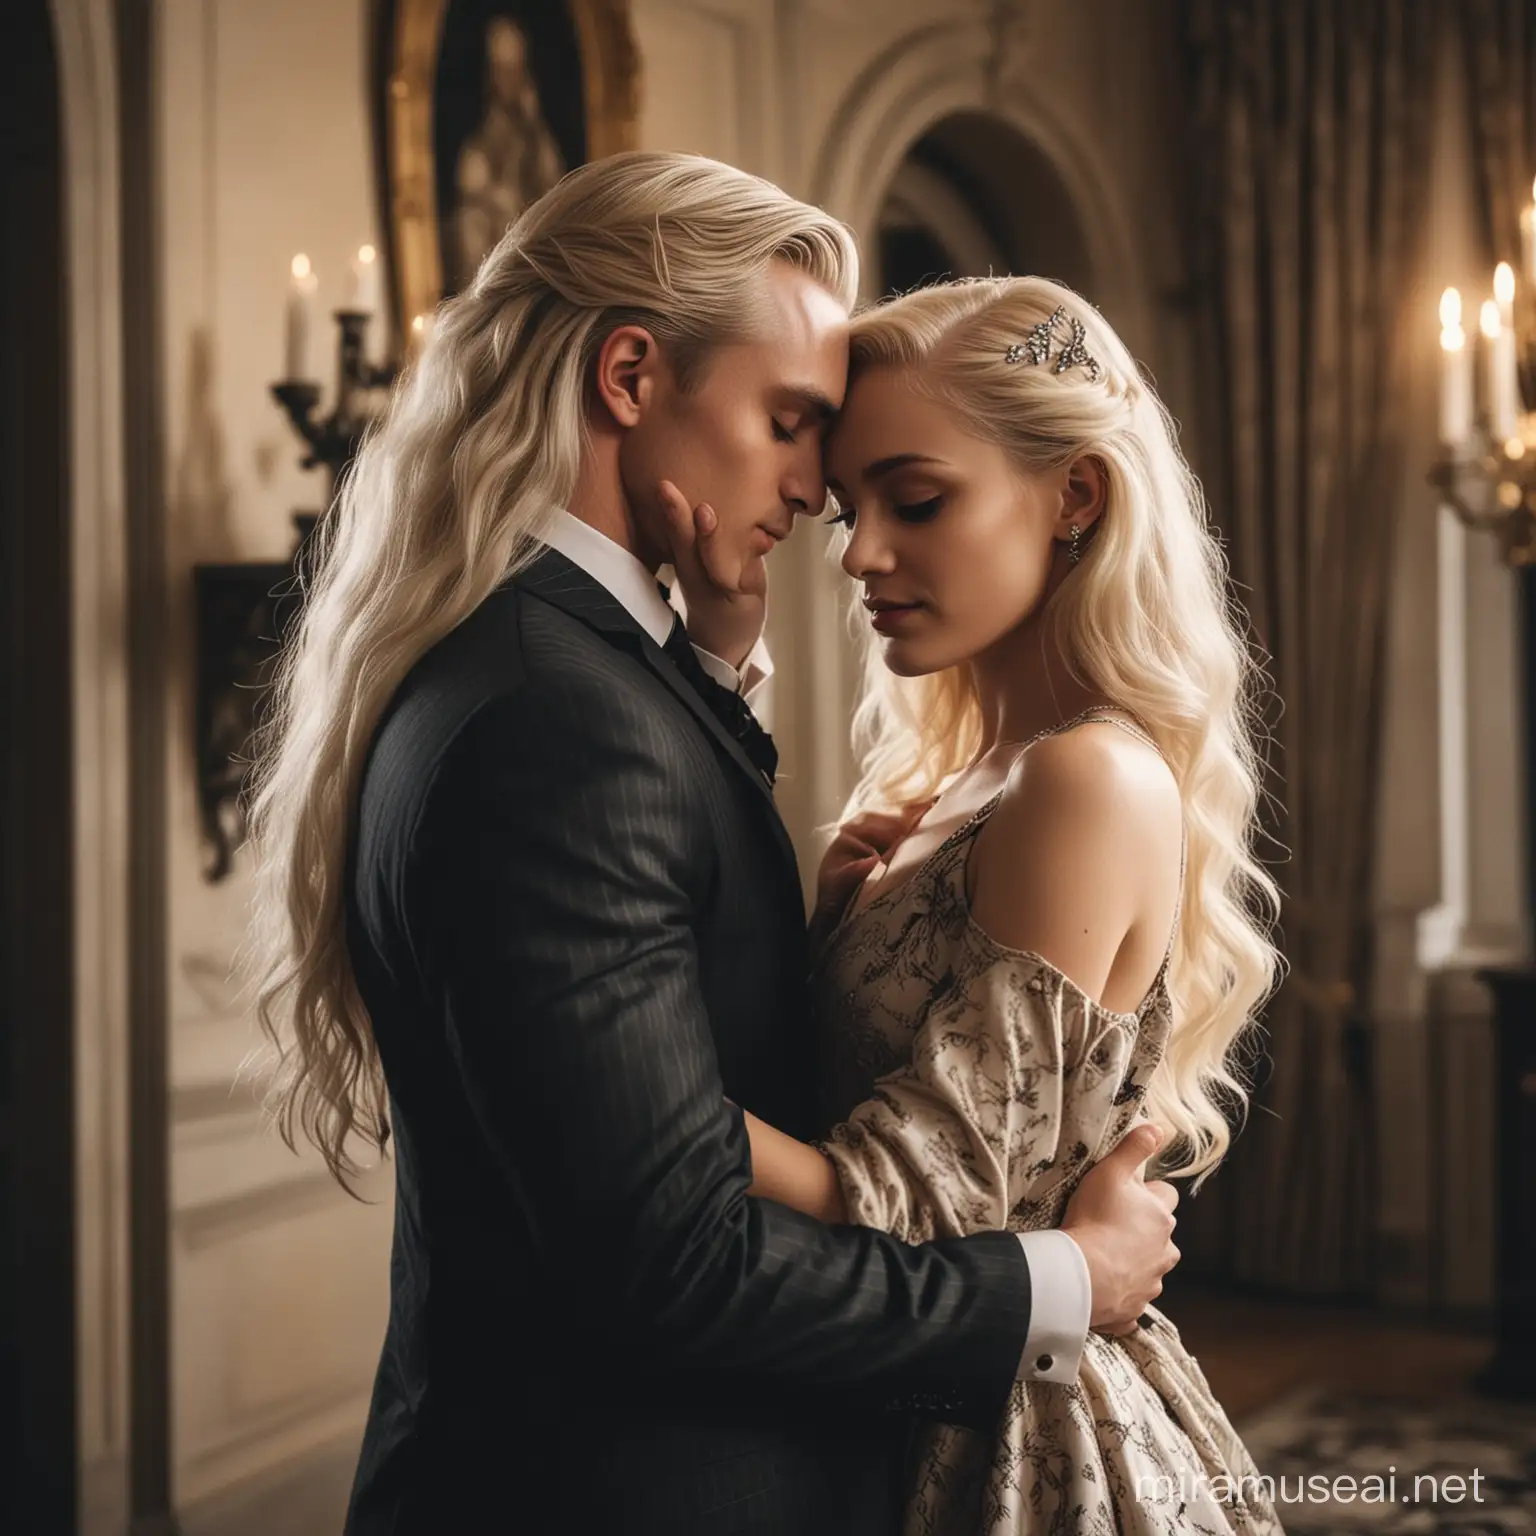 Elegant Blonde Girl Embracing DarkHaired Gentleman in Luxurious Malfoy Manor Setting